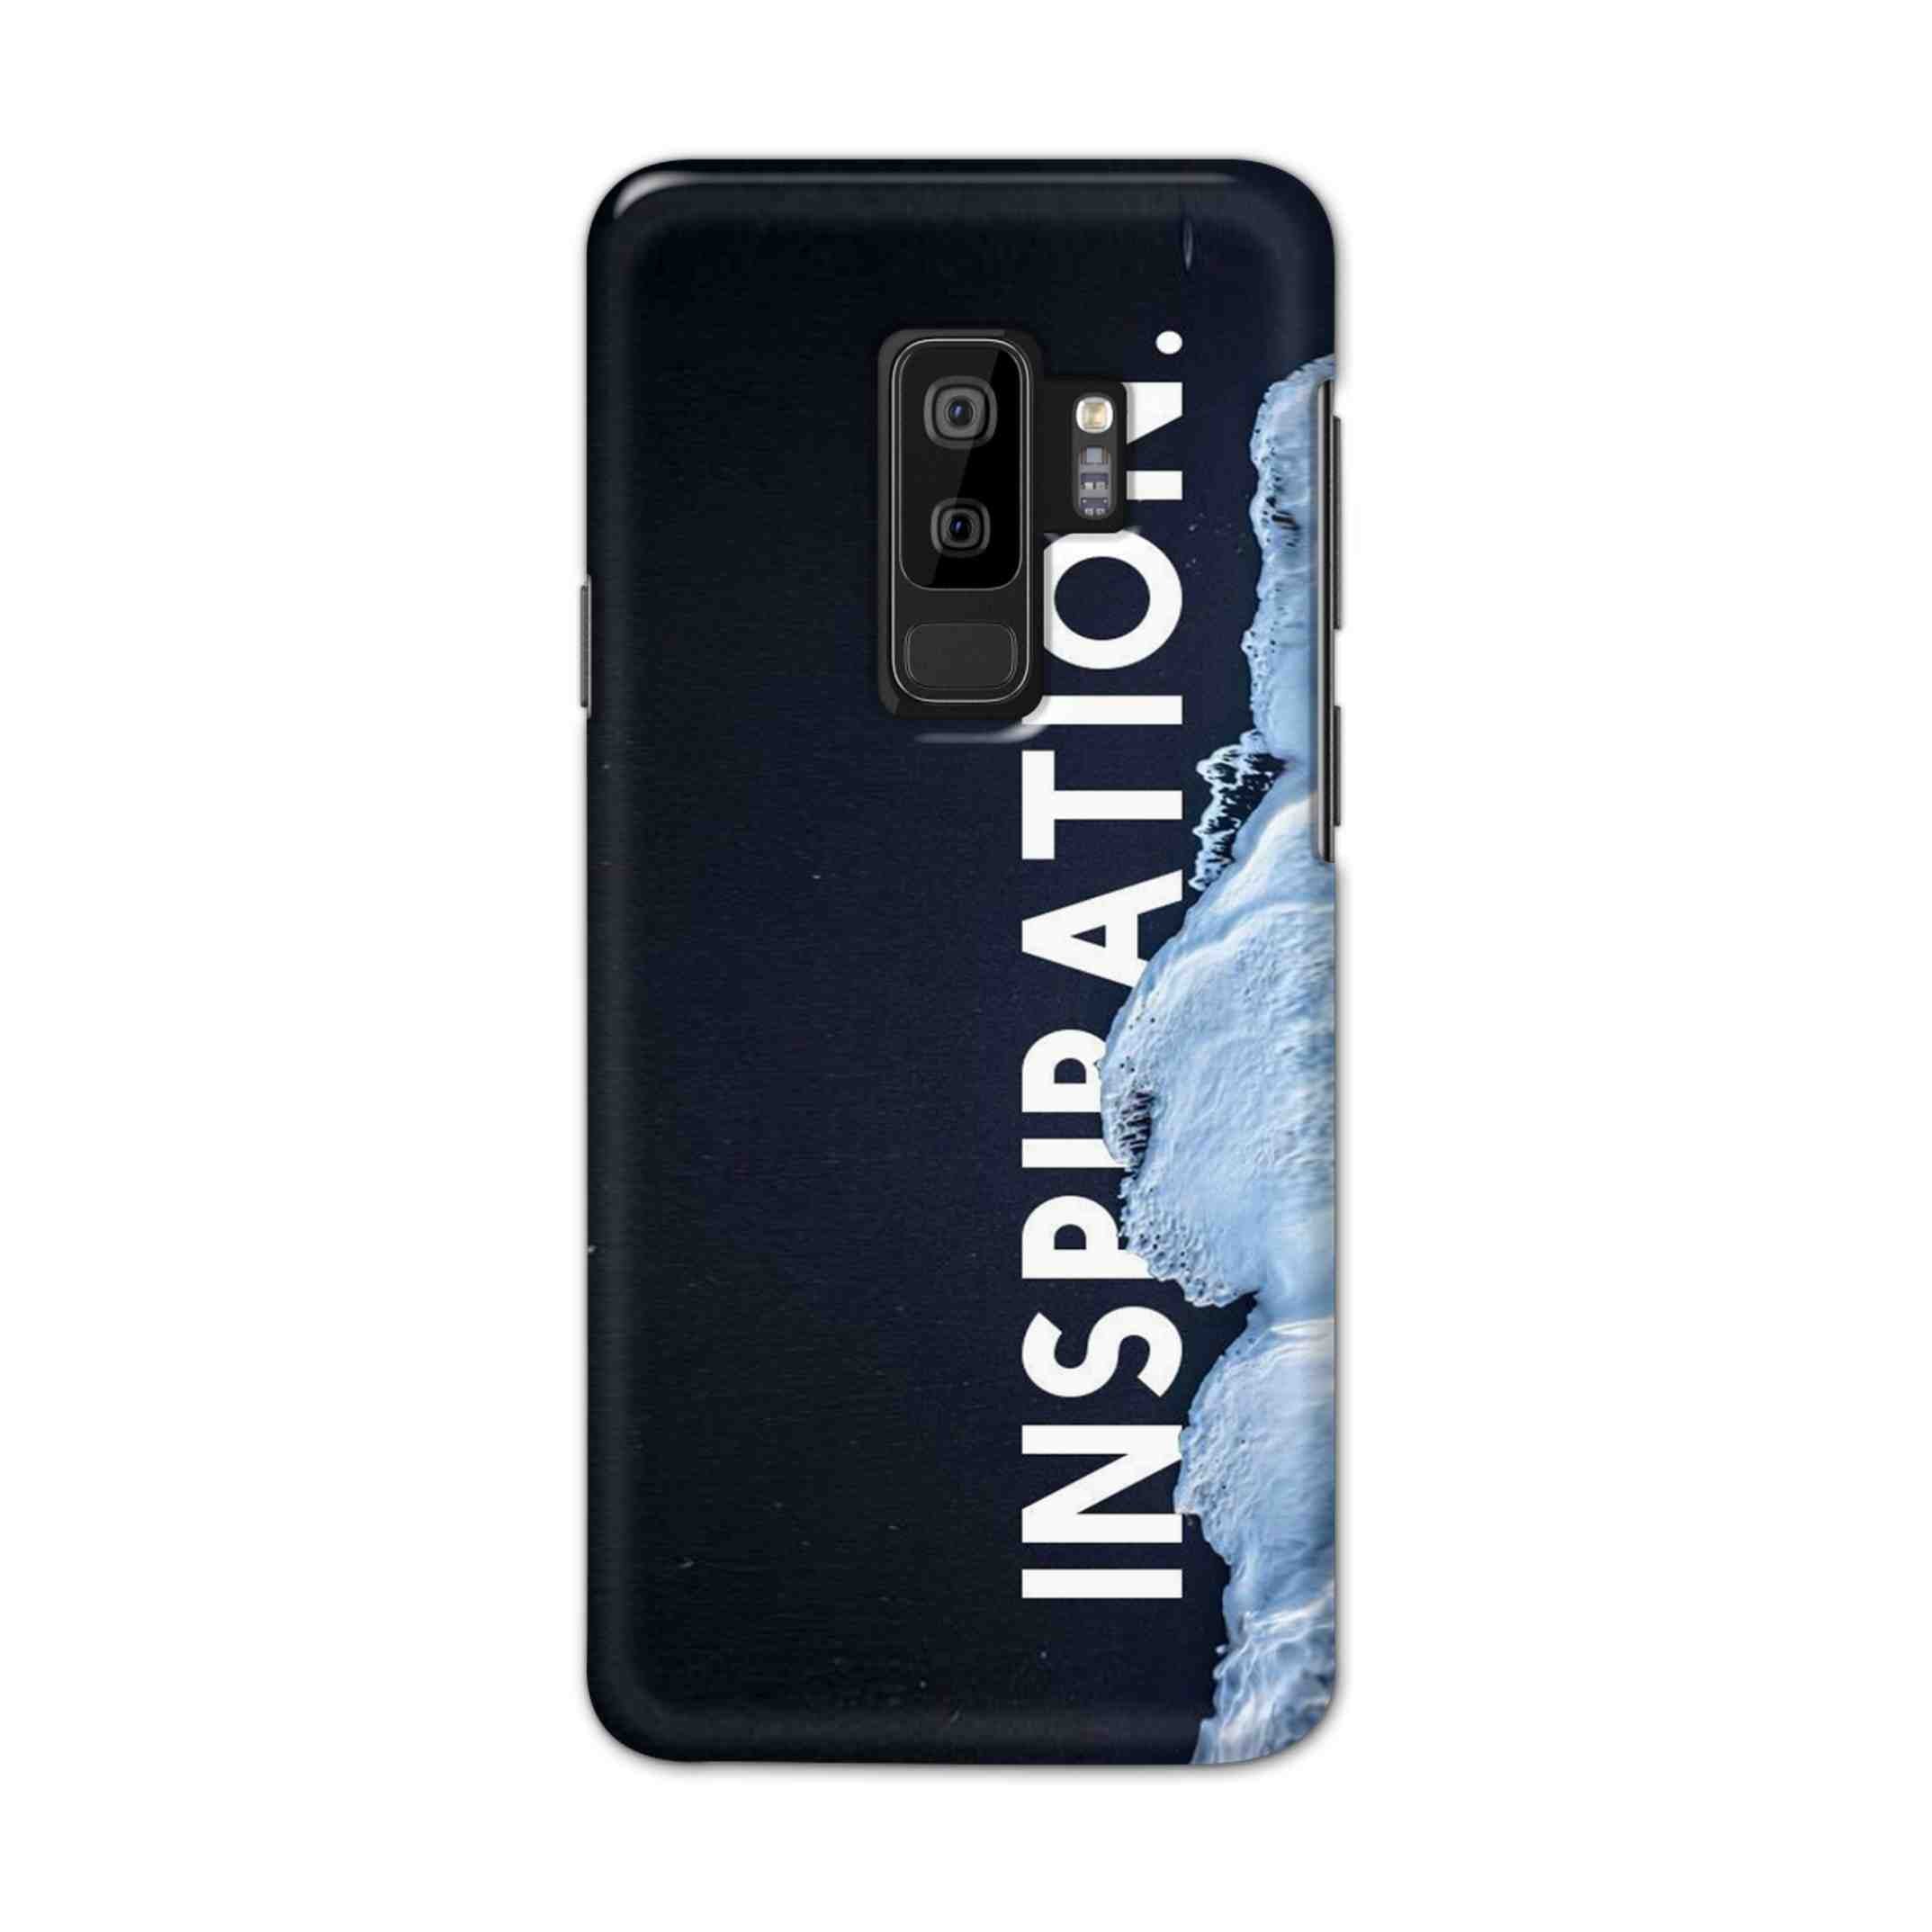 Buy Inspiration Hard Back Mobile Phone Case Cover For Samsung S9 plus Online